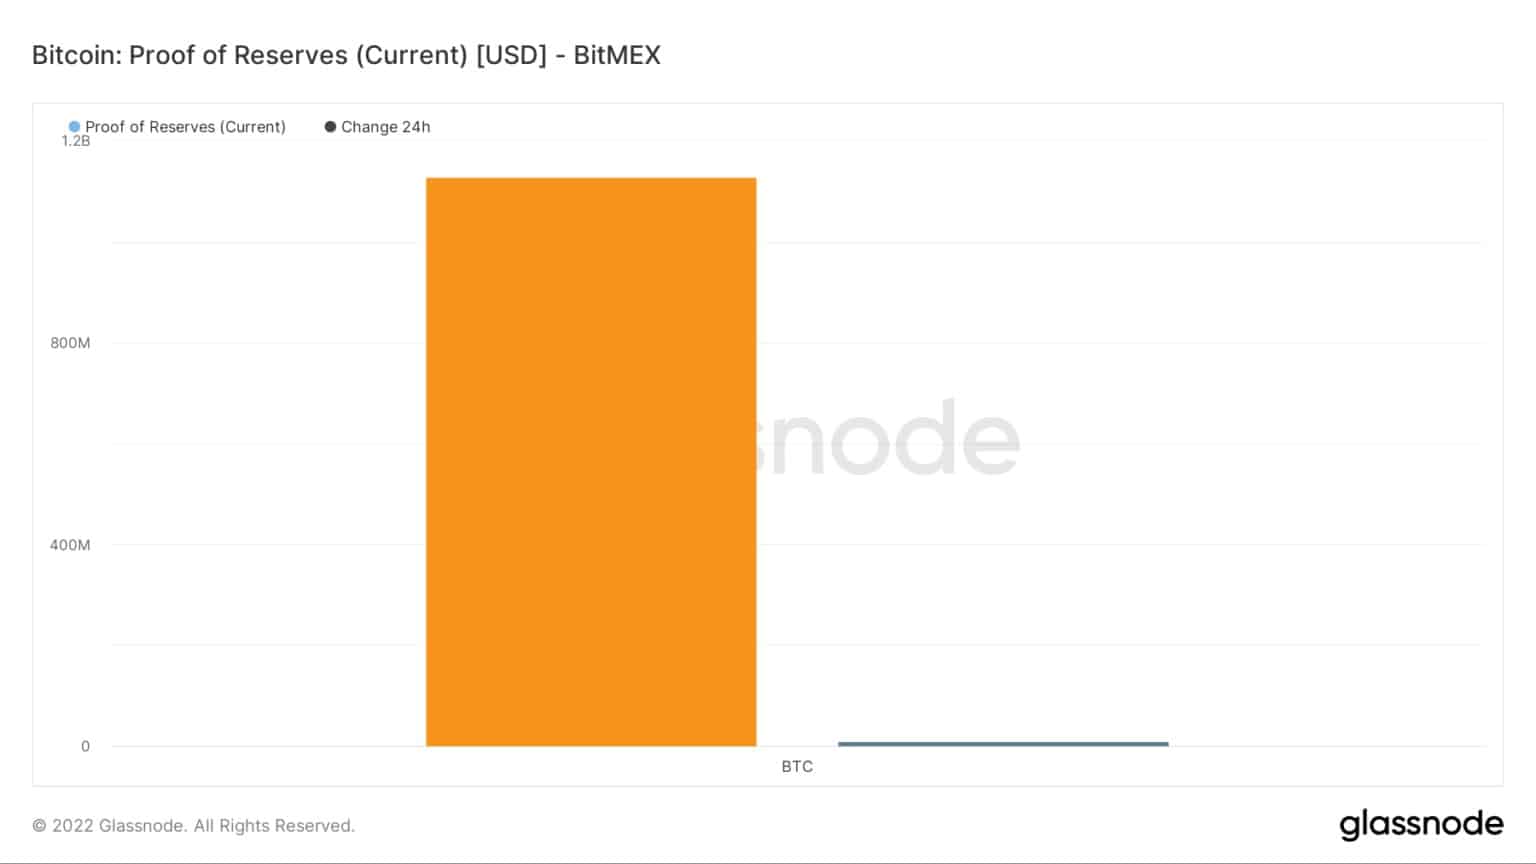 Prova delle riserve - BitMEX / Fonte: Glassnode